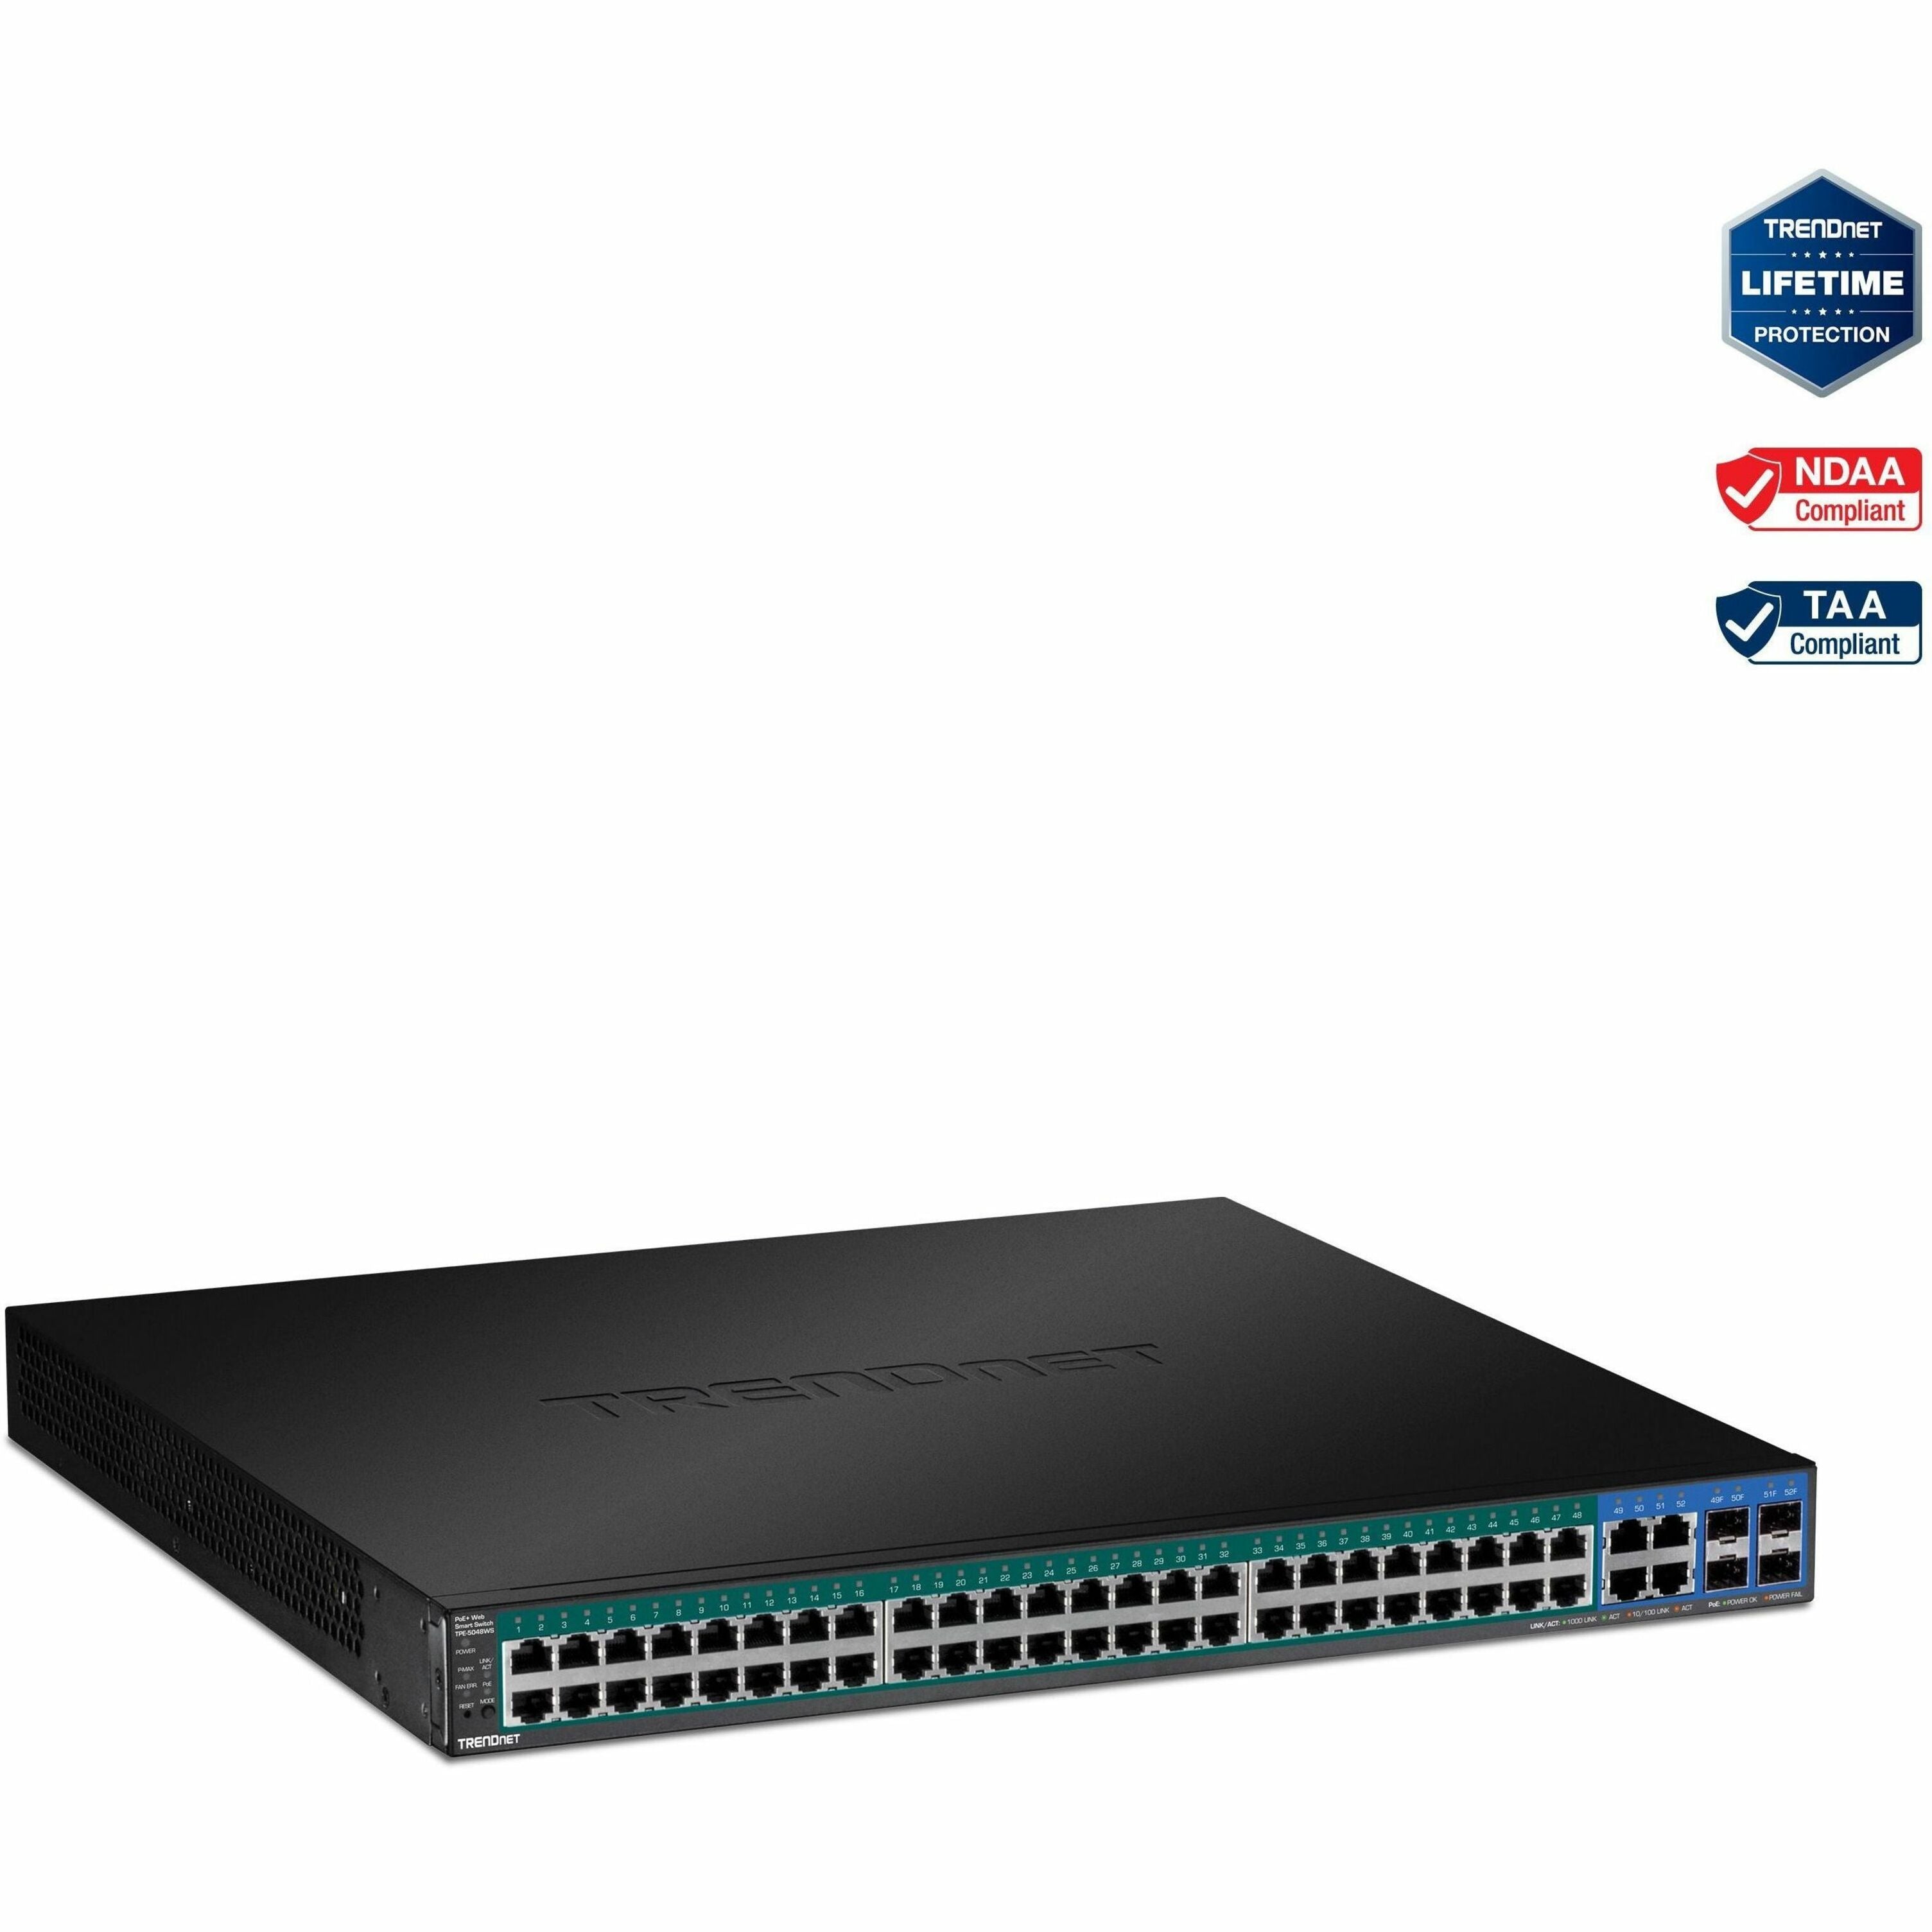 TRENDnet TPE-5048WS 52-Port Gigabit Web Smart PoE+ Switch, VLAN, QoS, LACP, IPv6 Support